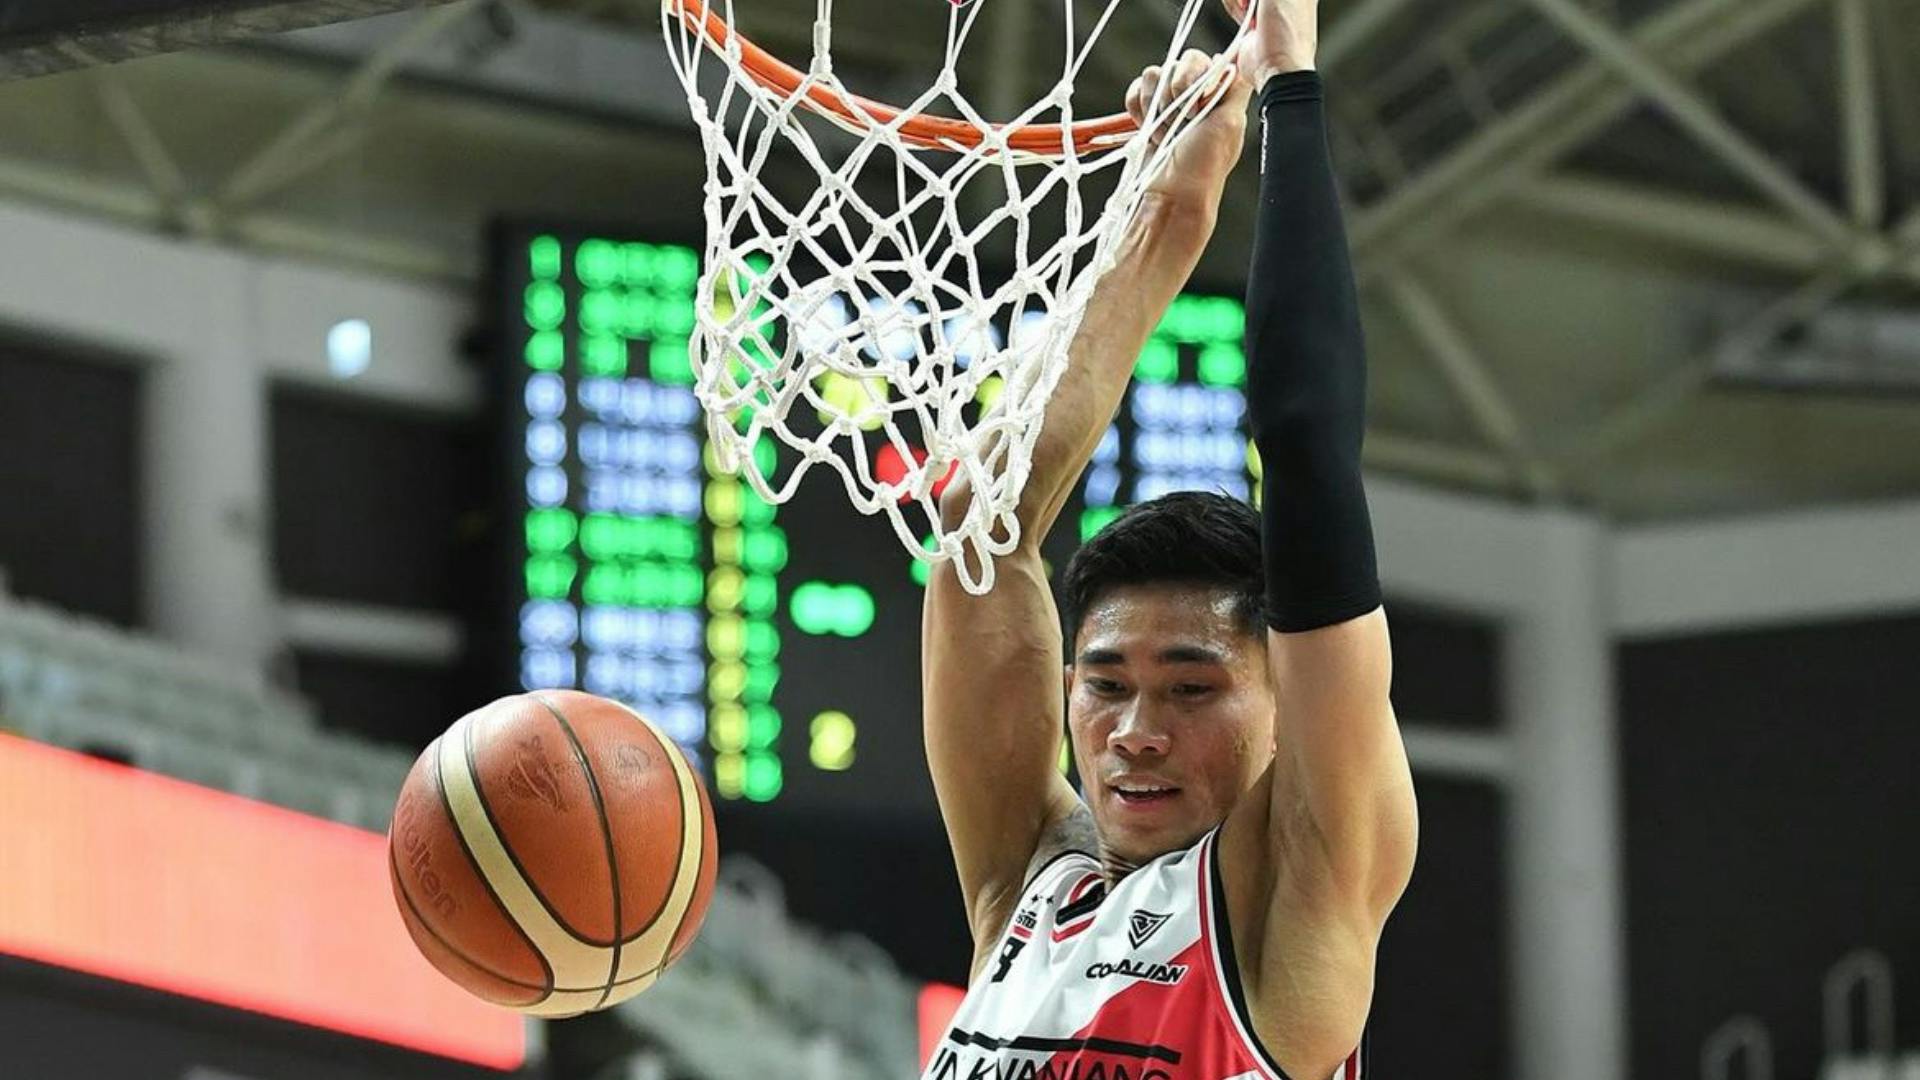 WATCH: Air Abando takes flight with Kobe-esque slam dunk